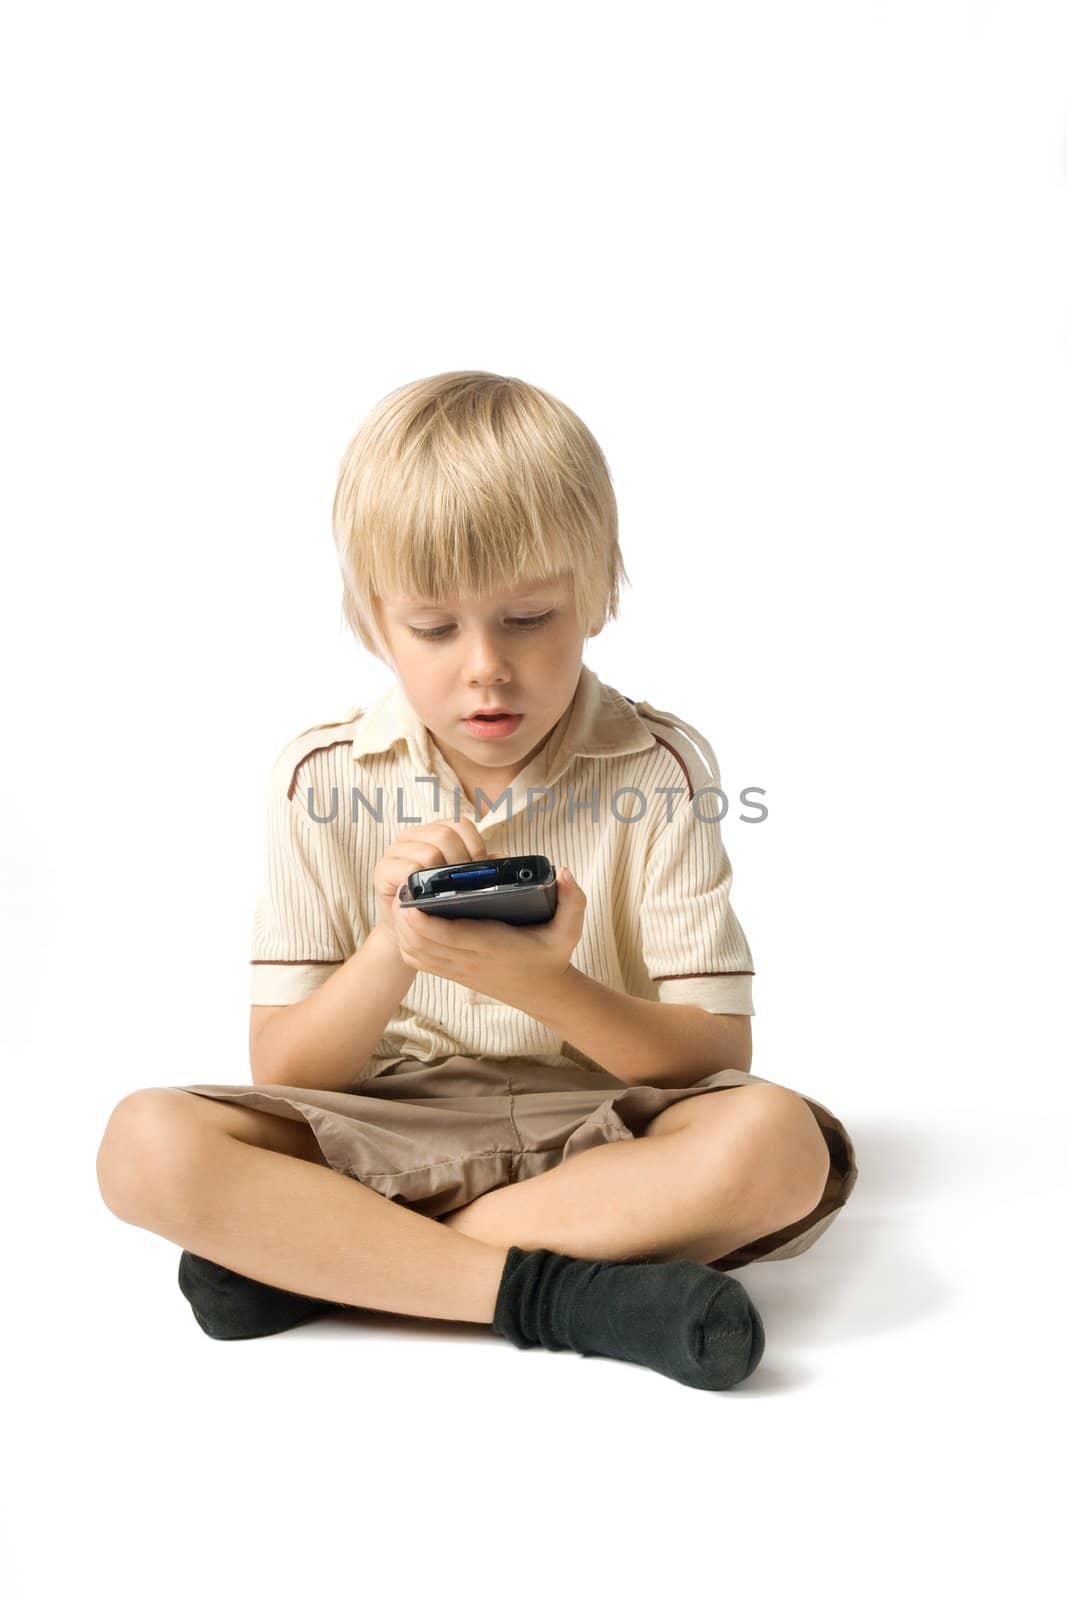 Little boy playing with PDA, studio shot